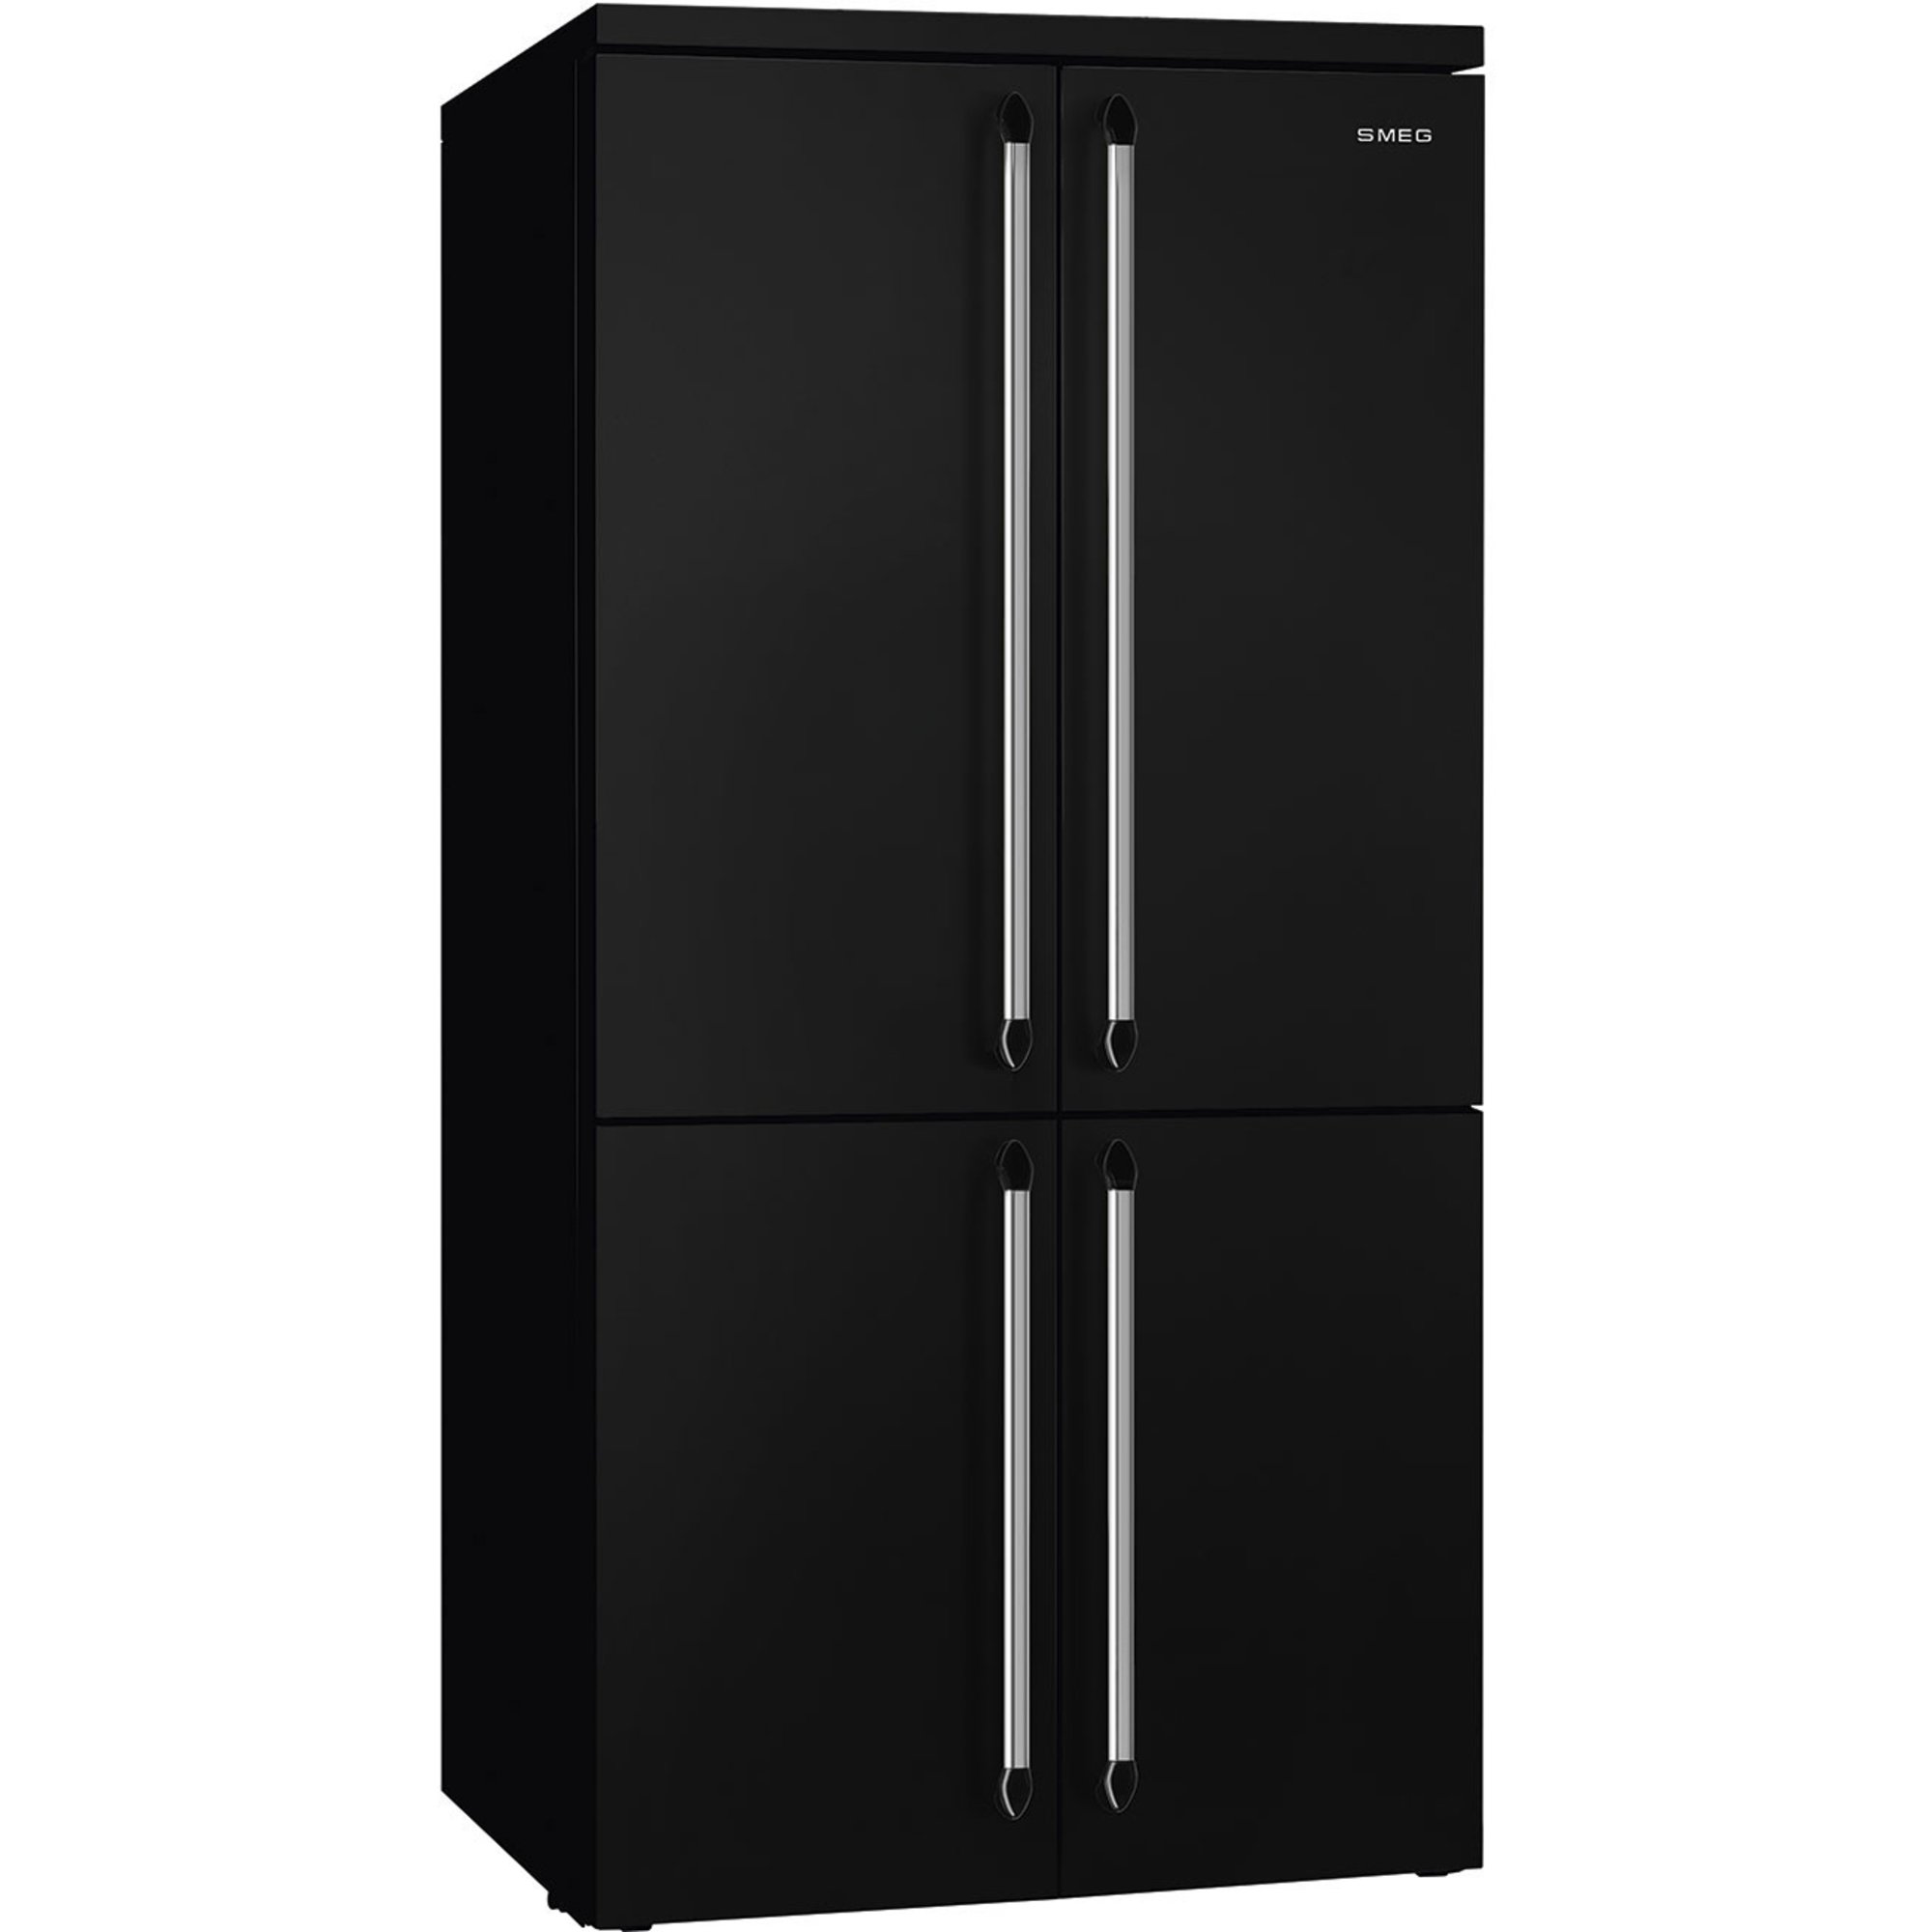 Smeg Køleskab/fryser FQ960 187 cm, sort